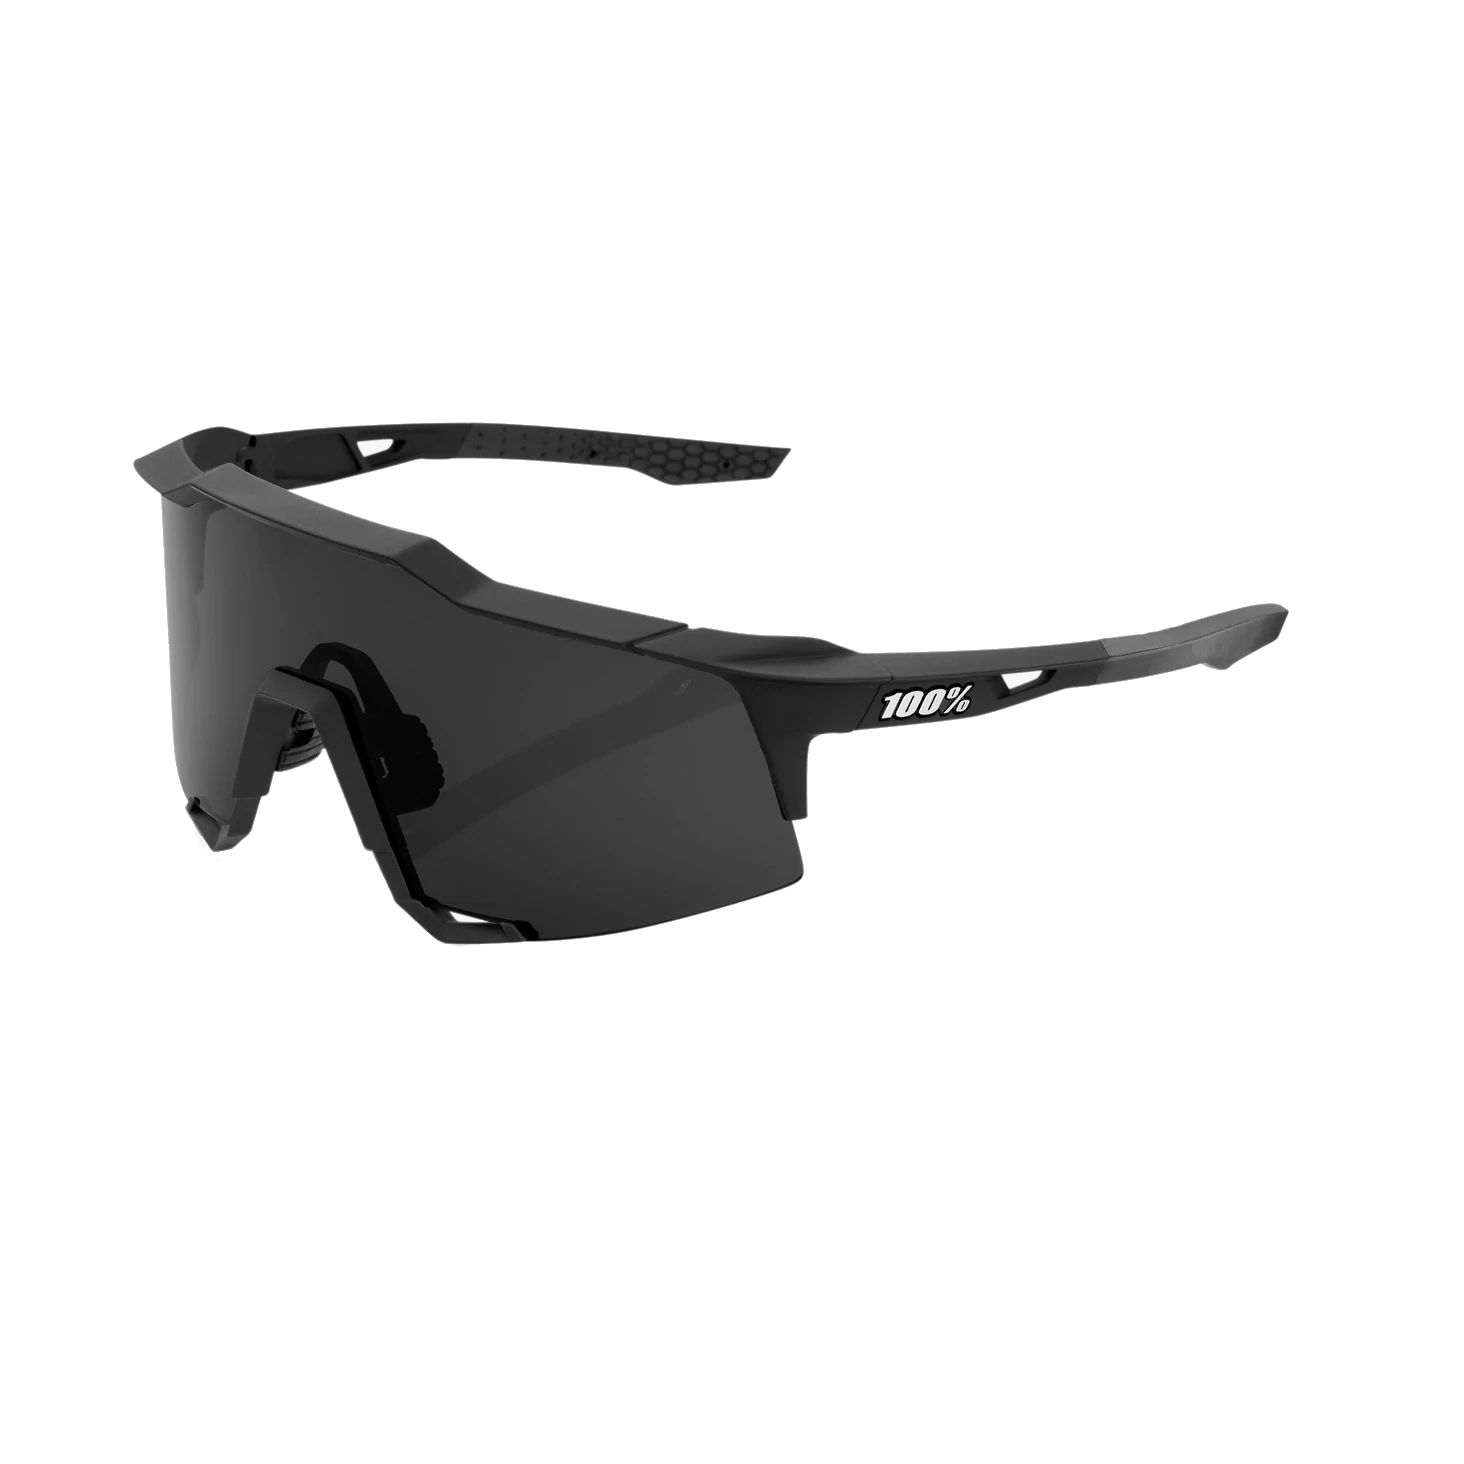 Productfoto van 100% Speedcraft Glasses - Smoke Lens - Soft Tact Black / + Clear